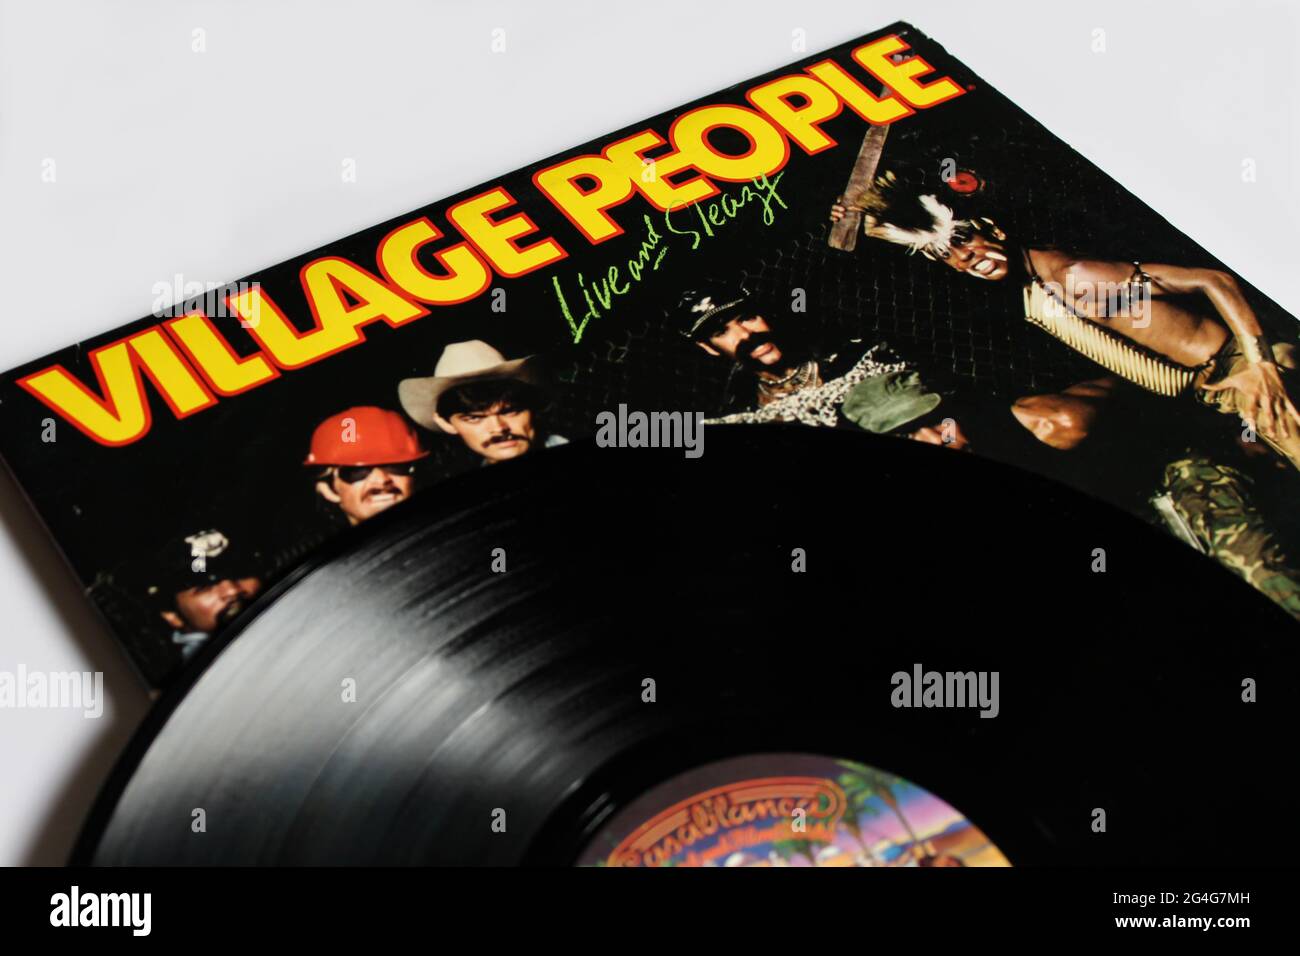 Disco, Funk und Soul Band, The Village People Music Album auf Vinyl LP Disc. Titel: Live und Sleazy Album Cover Stockfoto